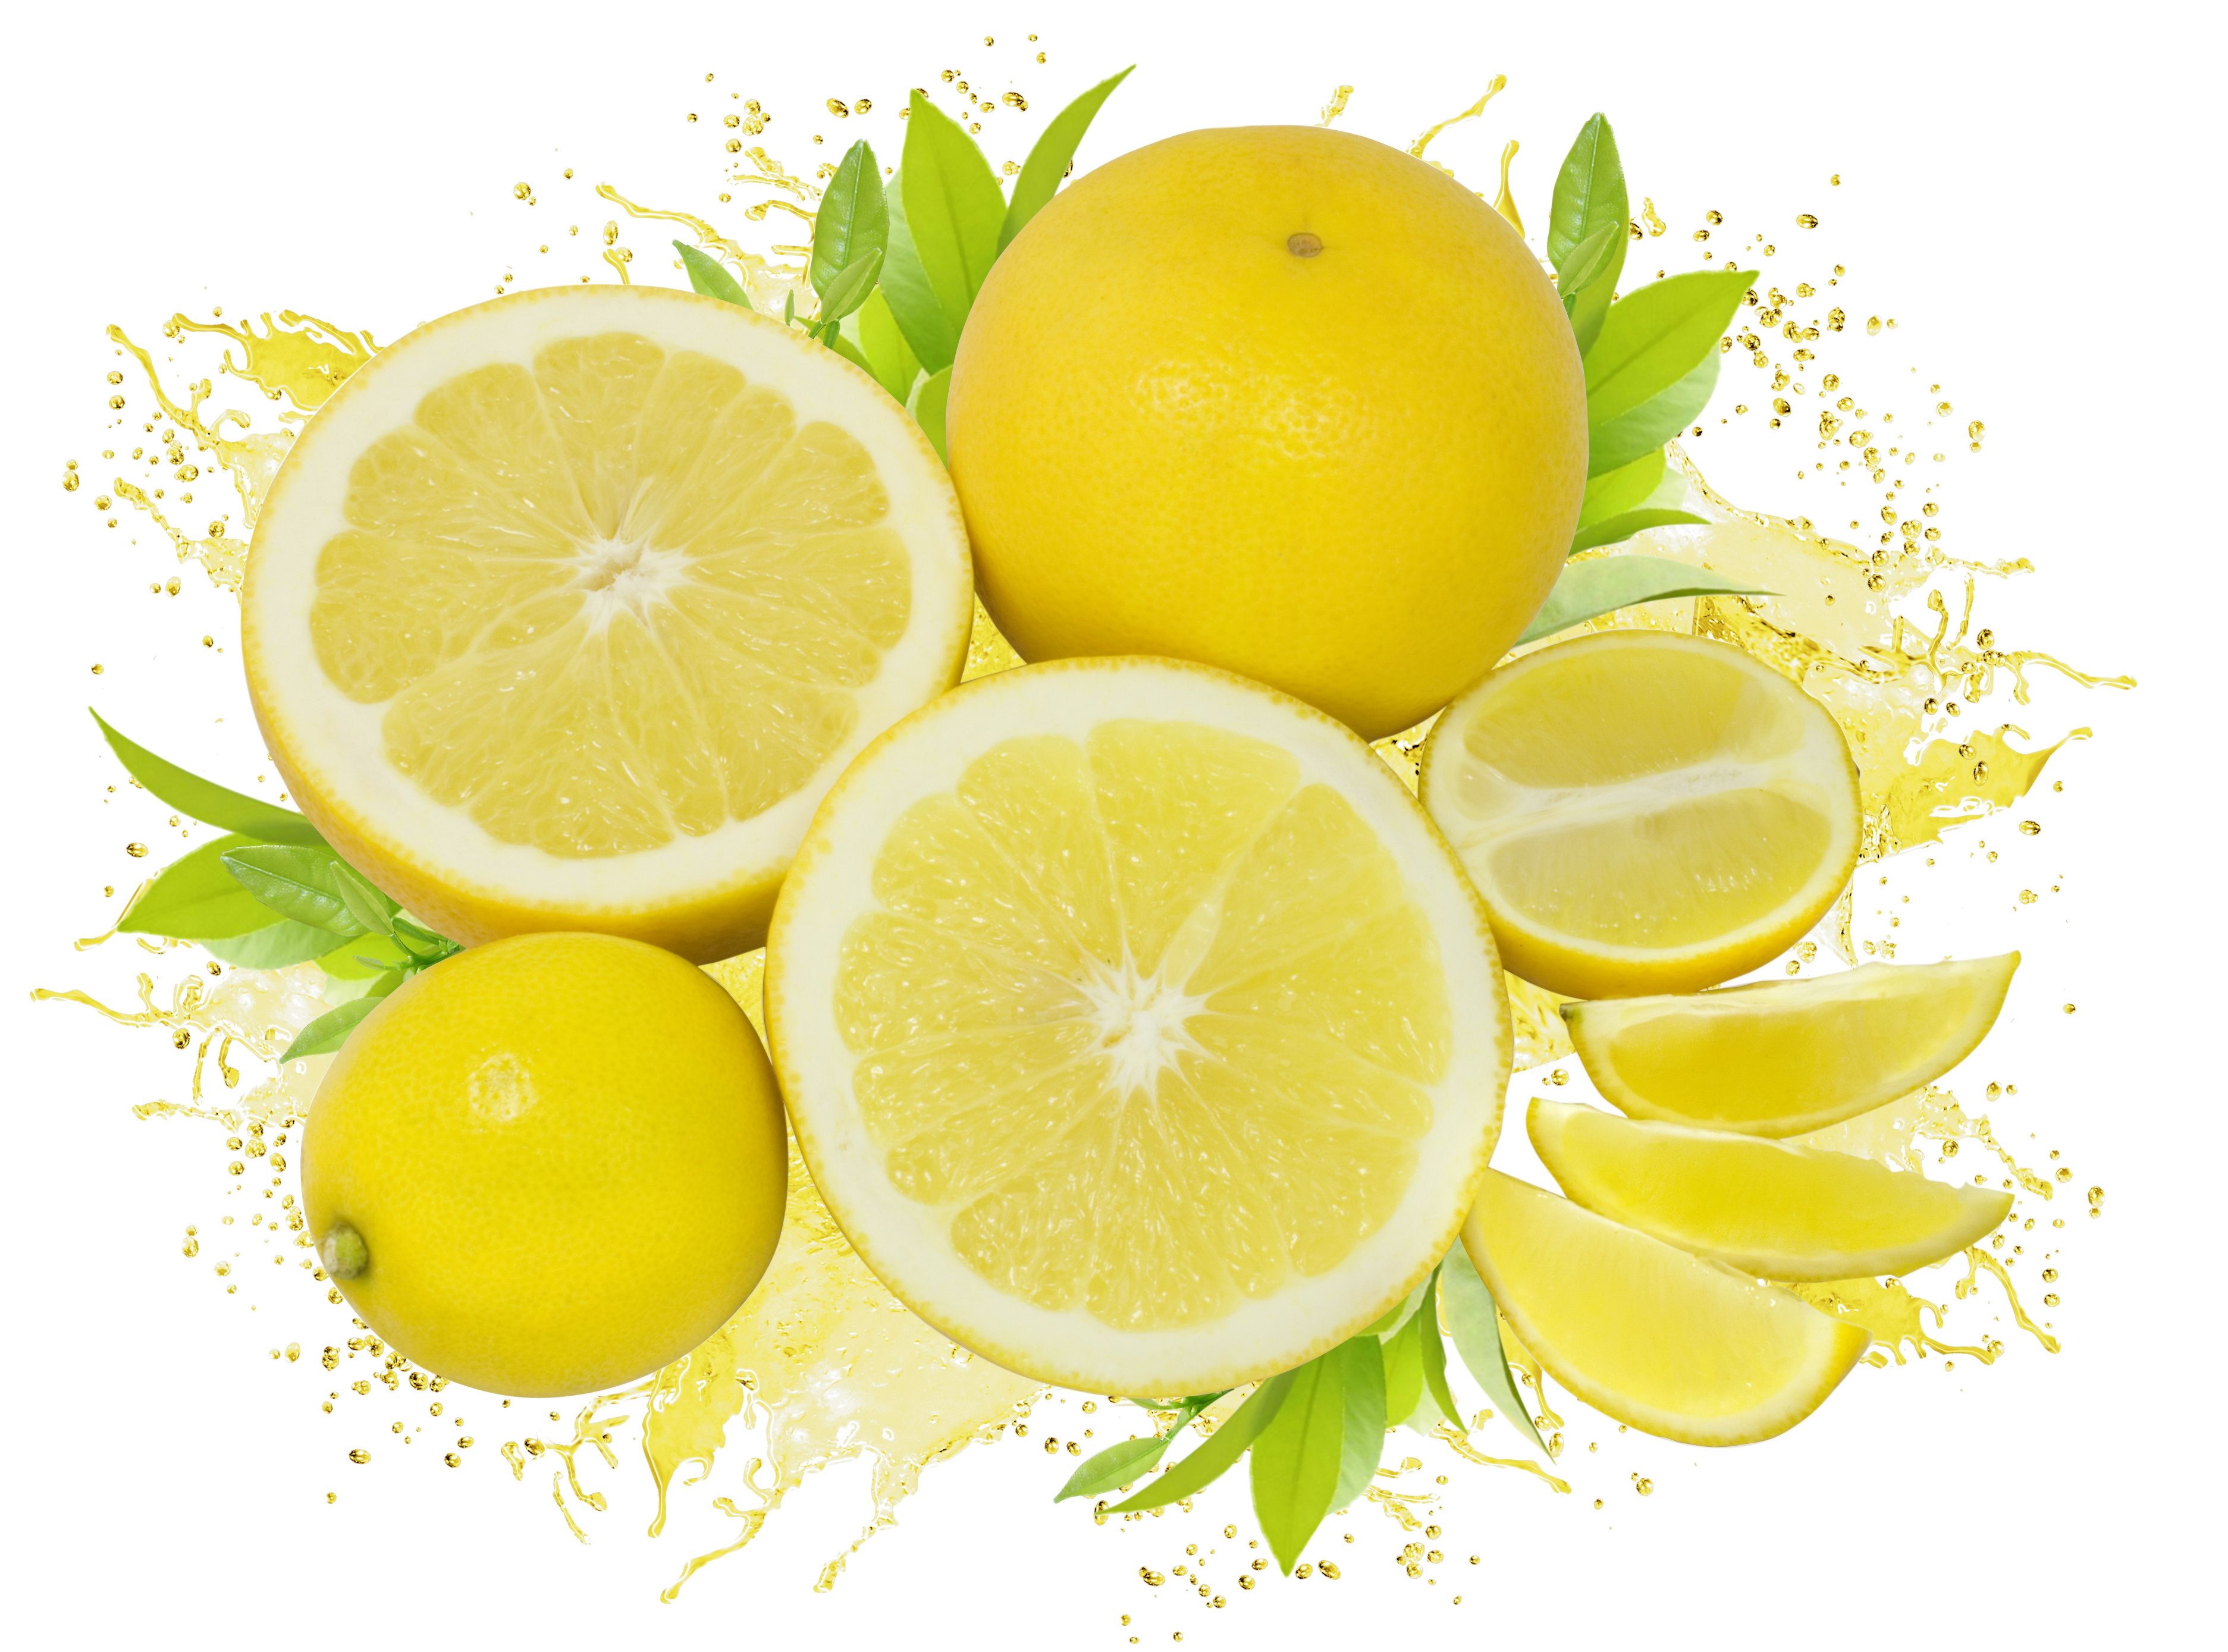 Wallpaper, food, fruit, orange, spray, citrus, produce, land plant, flowering plant, sweet lemon, lemon lime, lemon juice 3746x2778